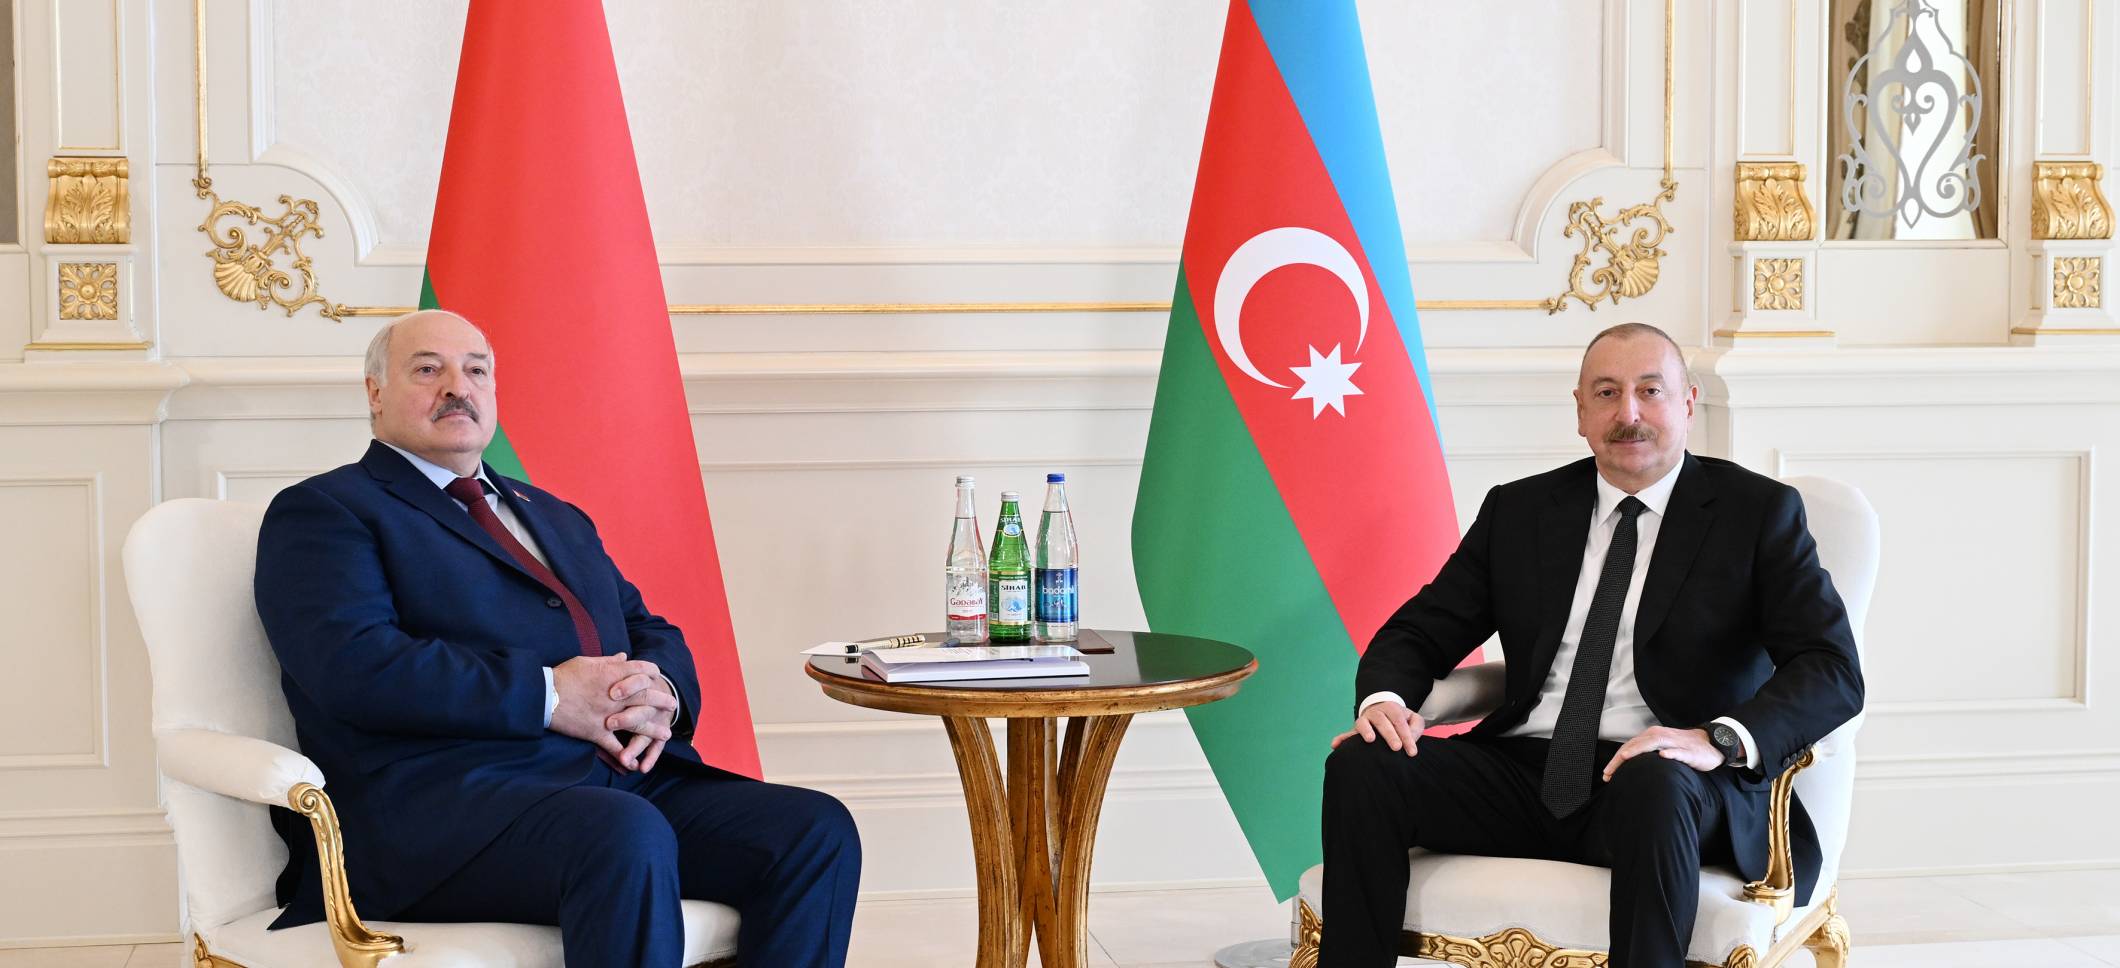 Azerbaijani and Belarusian Presidents held one-on-one meeting